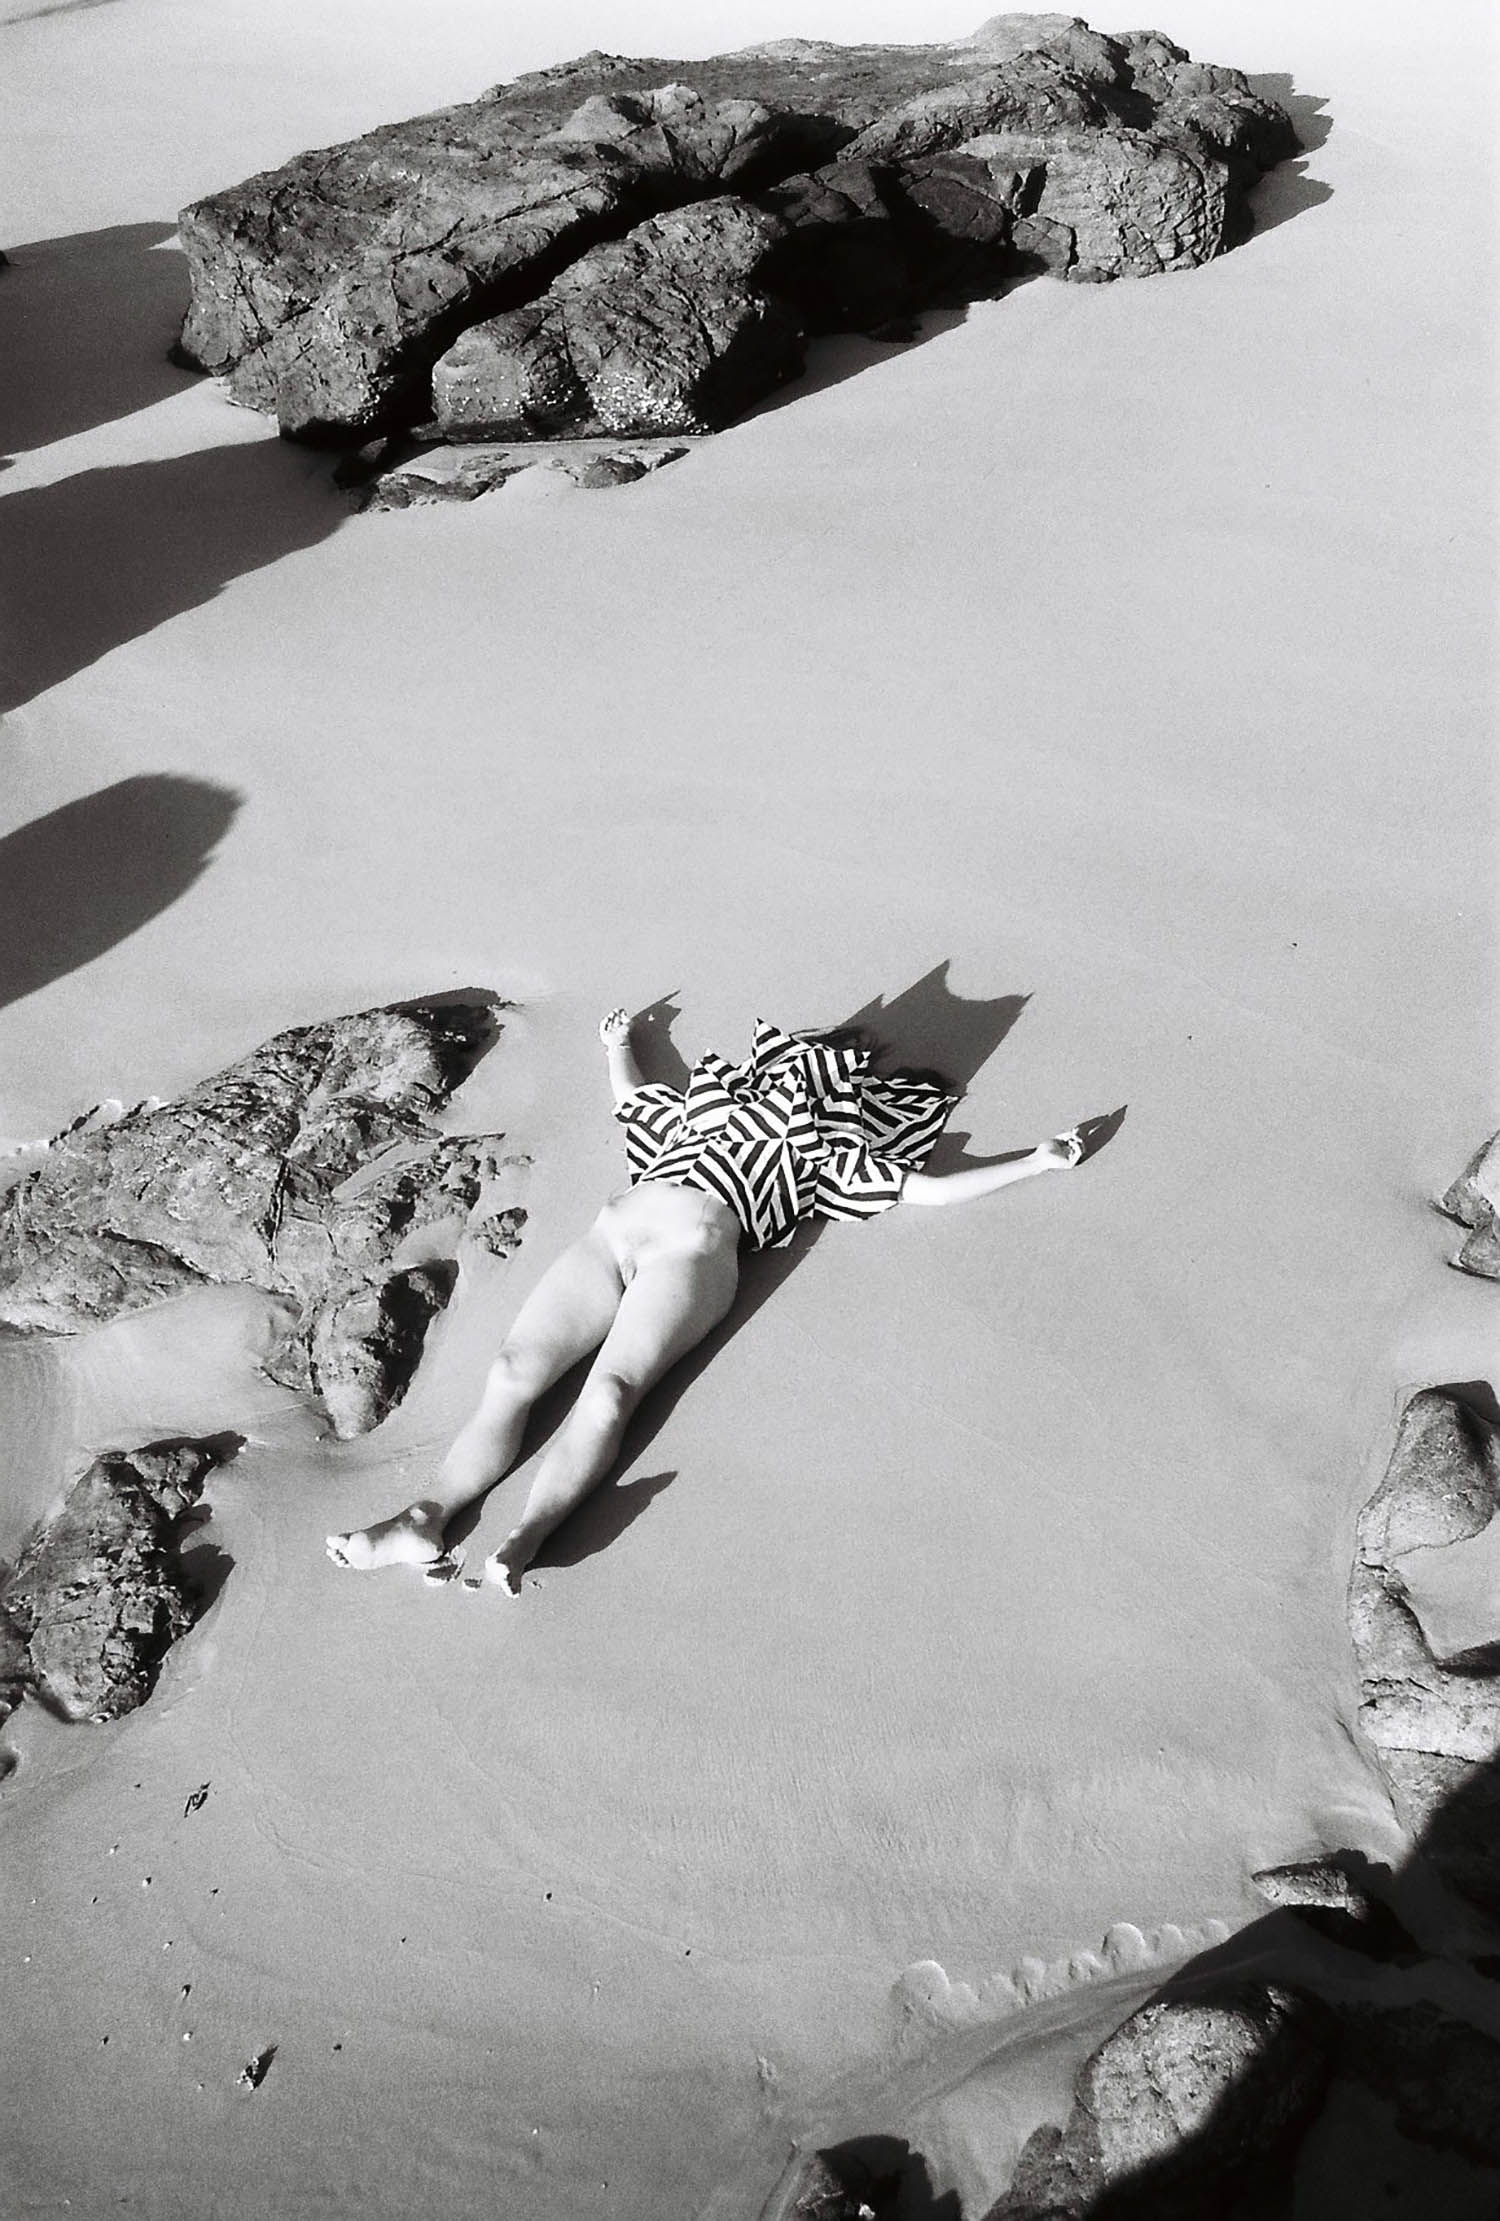   Illusion quilt over me at Coolum beach,&nbsp; 2016, 35mm print (photo Rhett Wyman) 